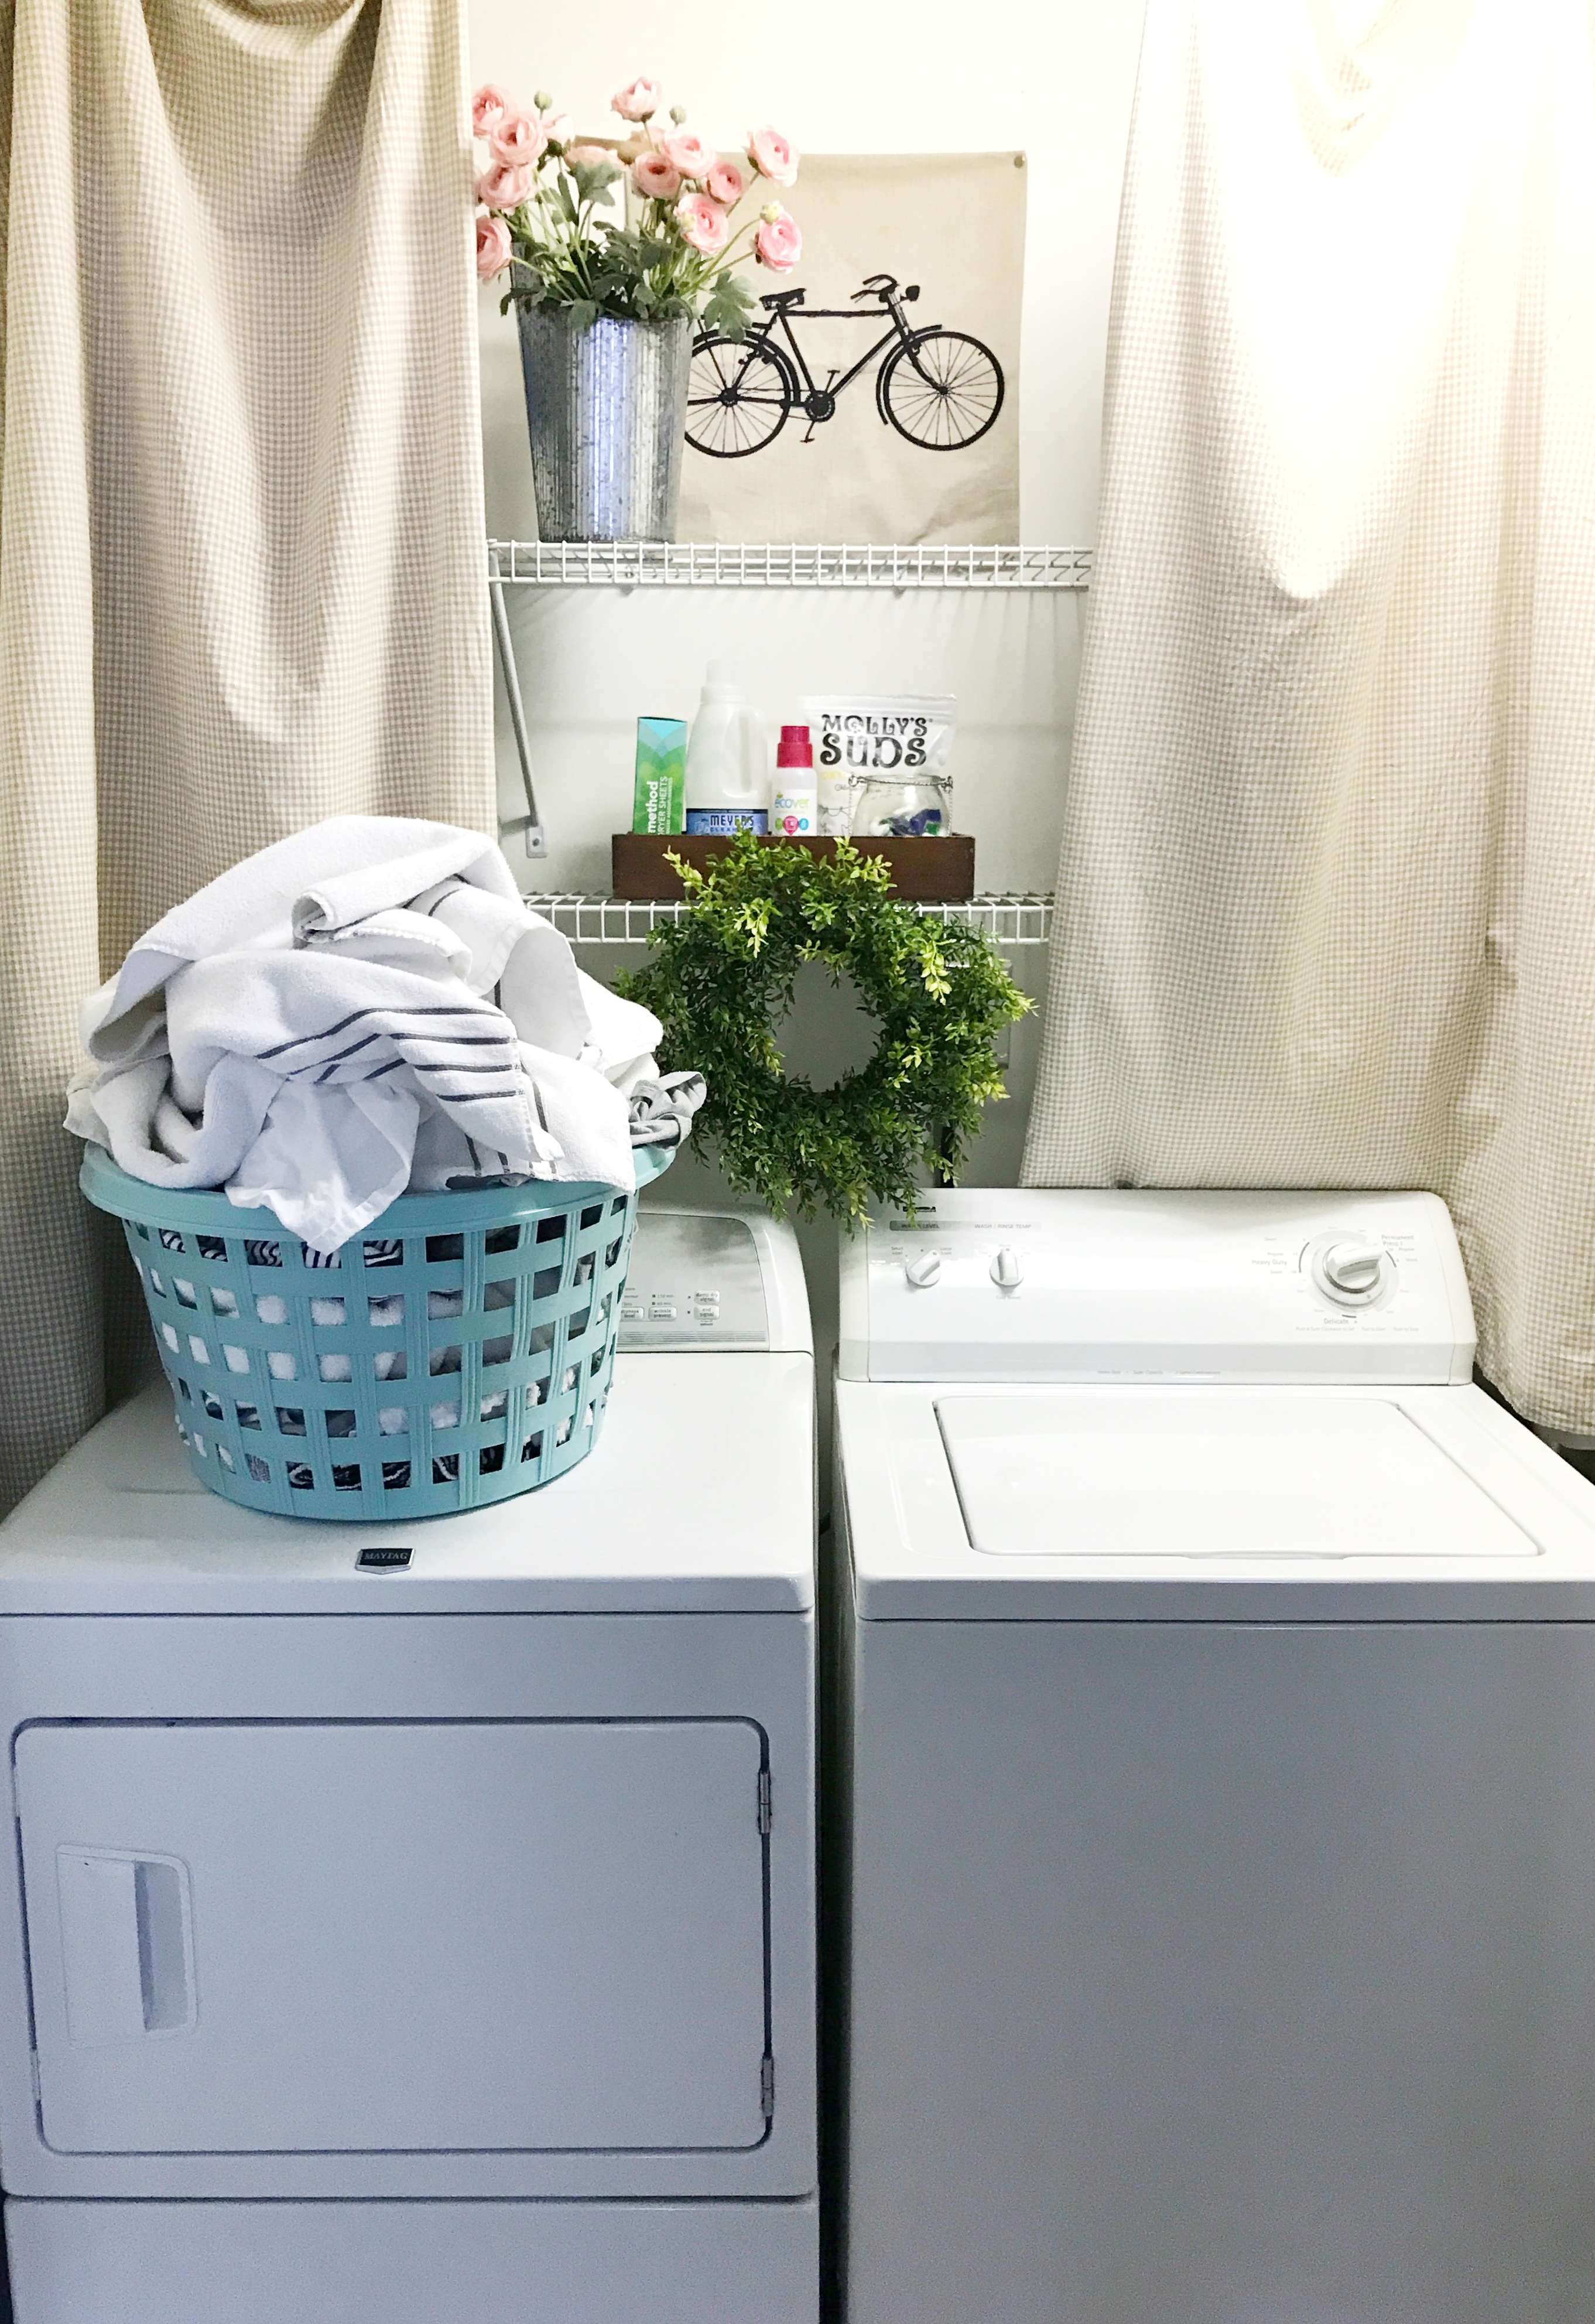 Laundry Countertop Decor and Organization: Spring Refresh - VIV & TIM